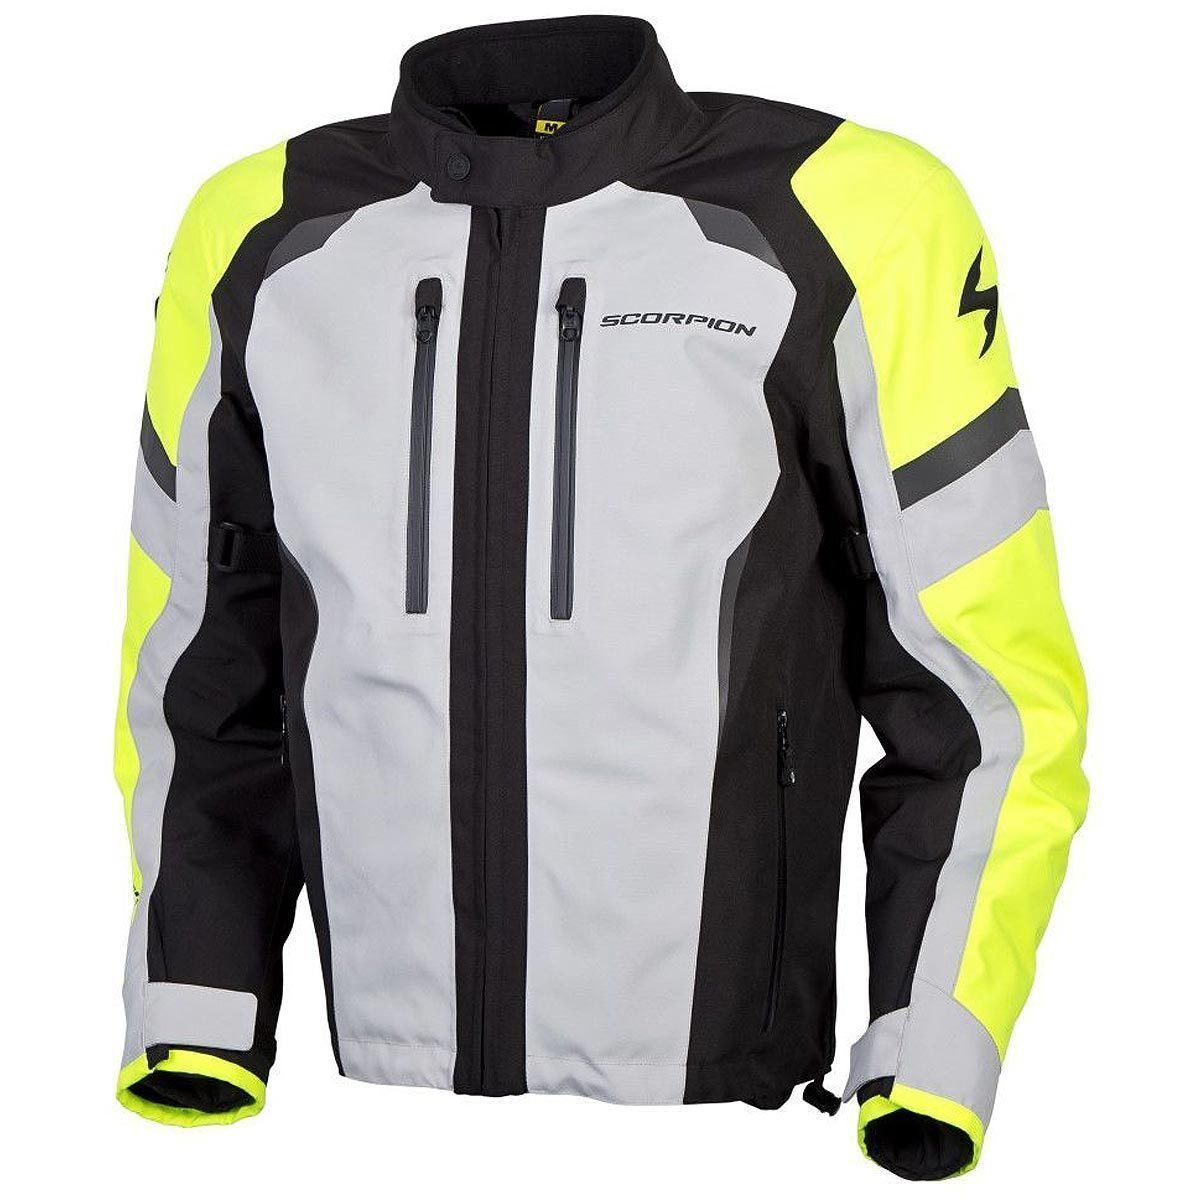 Scorpion Optima Men's Hi-Viz Yellow Textile Jacket with Armor